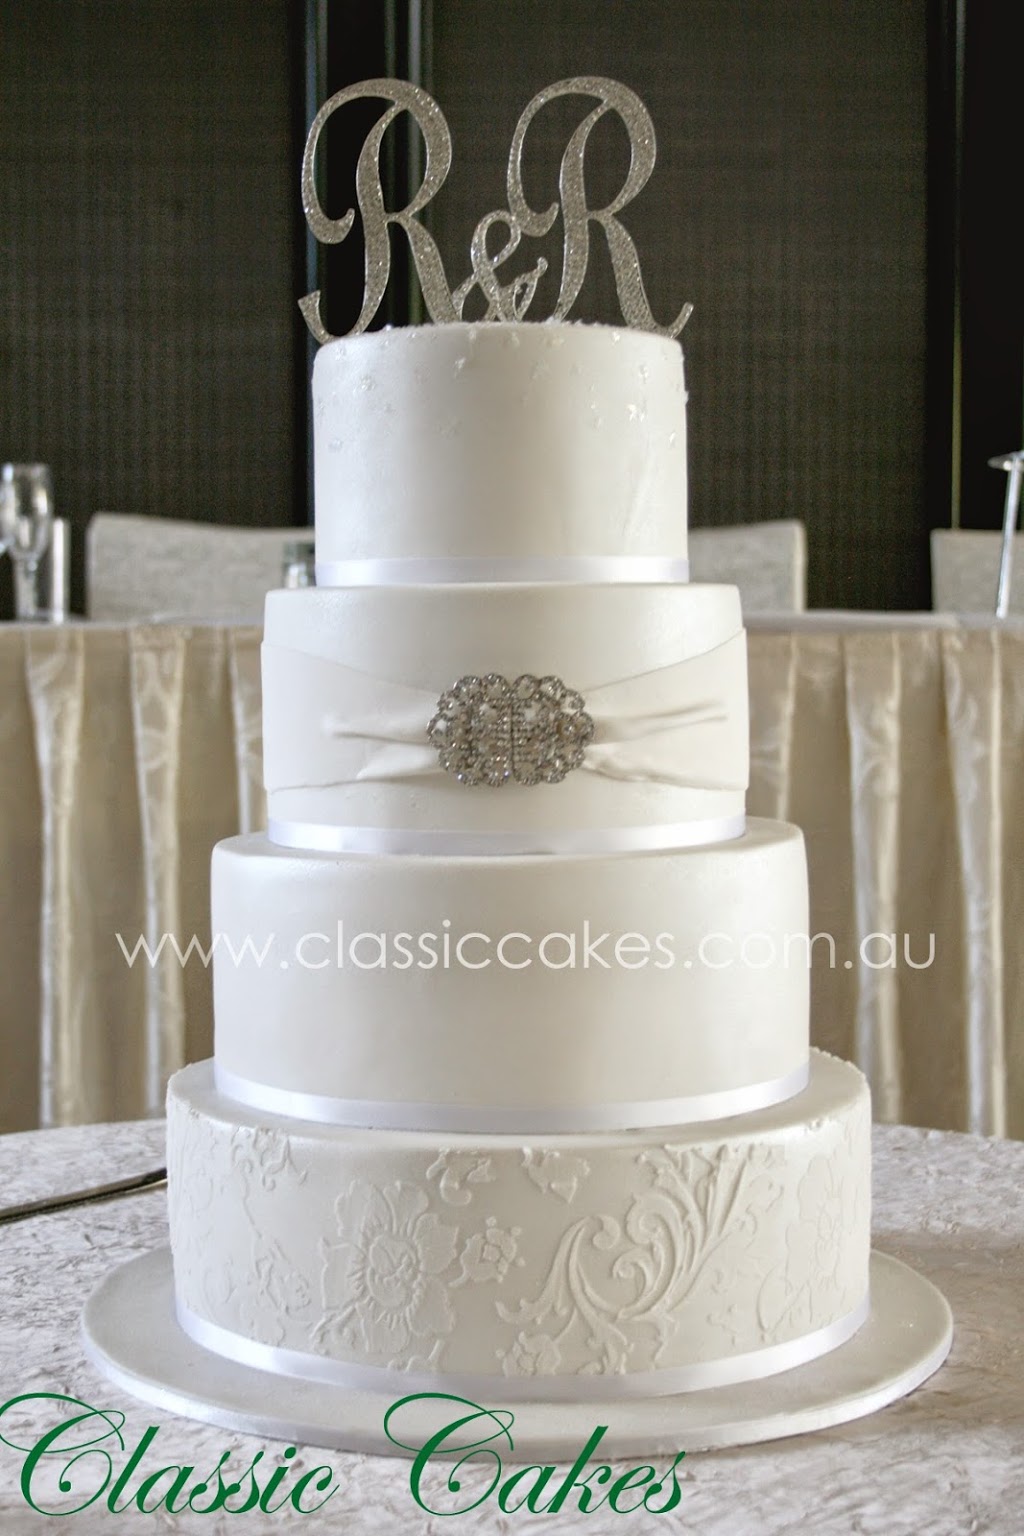 Classic Cakes | 55 Annangrove Rd, Kenthurst NSW 2156, Australia | Phone: 0405 133 081